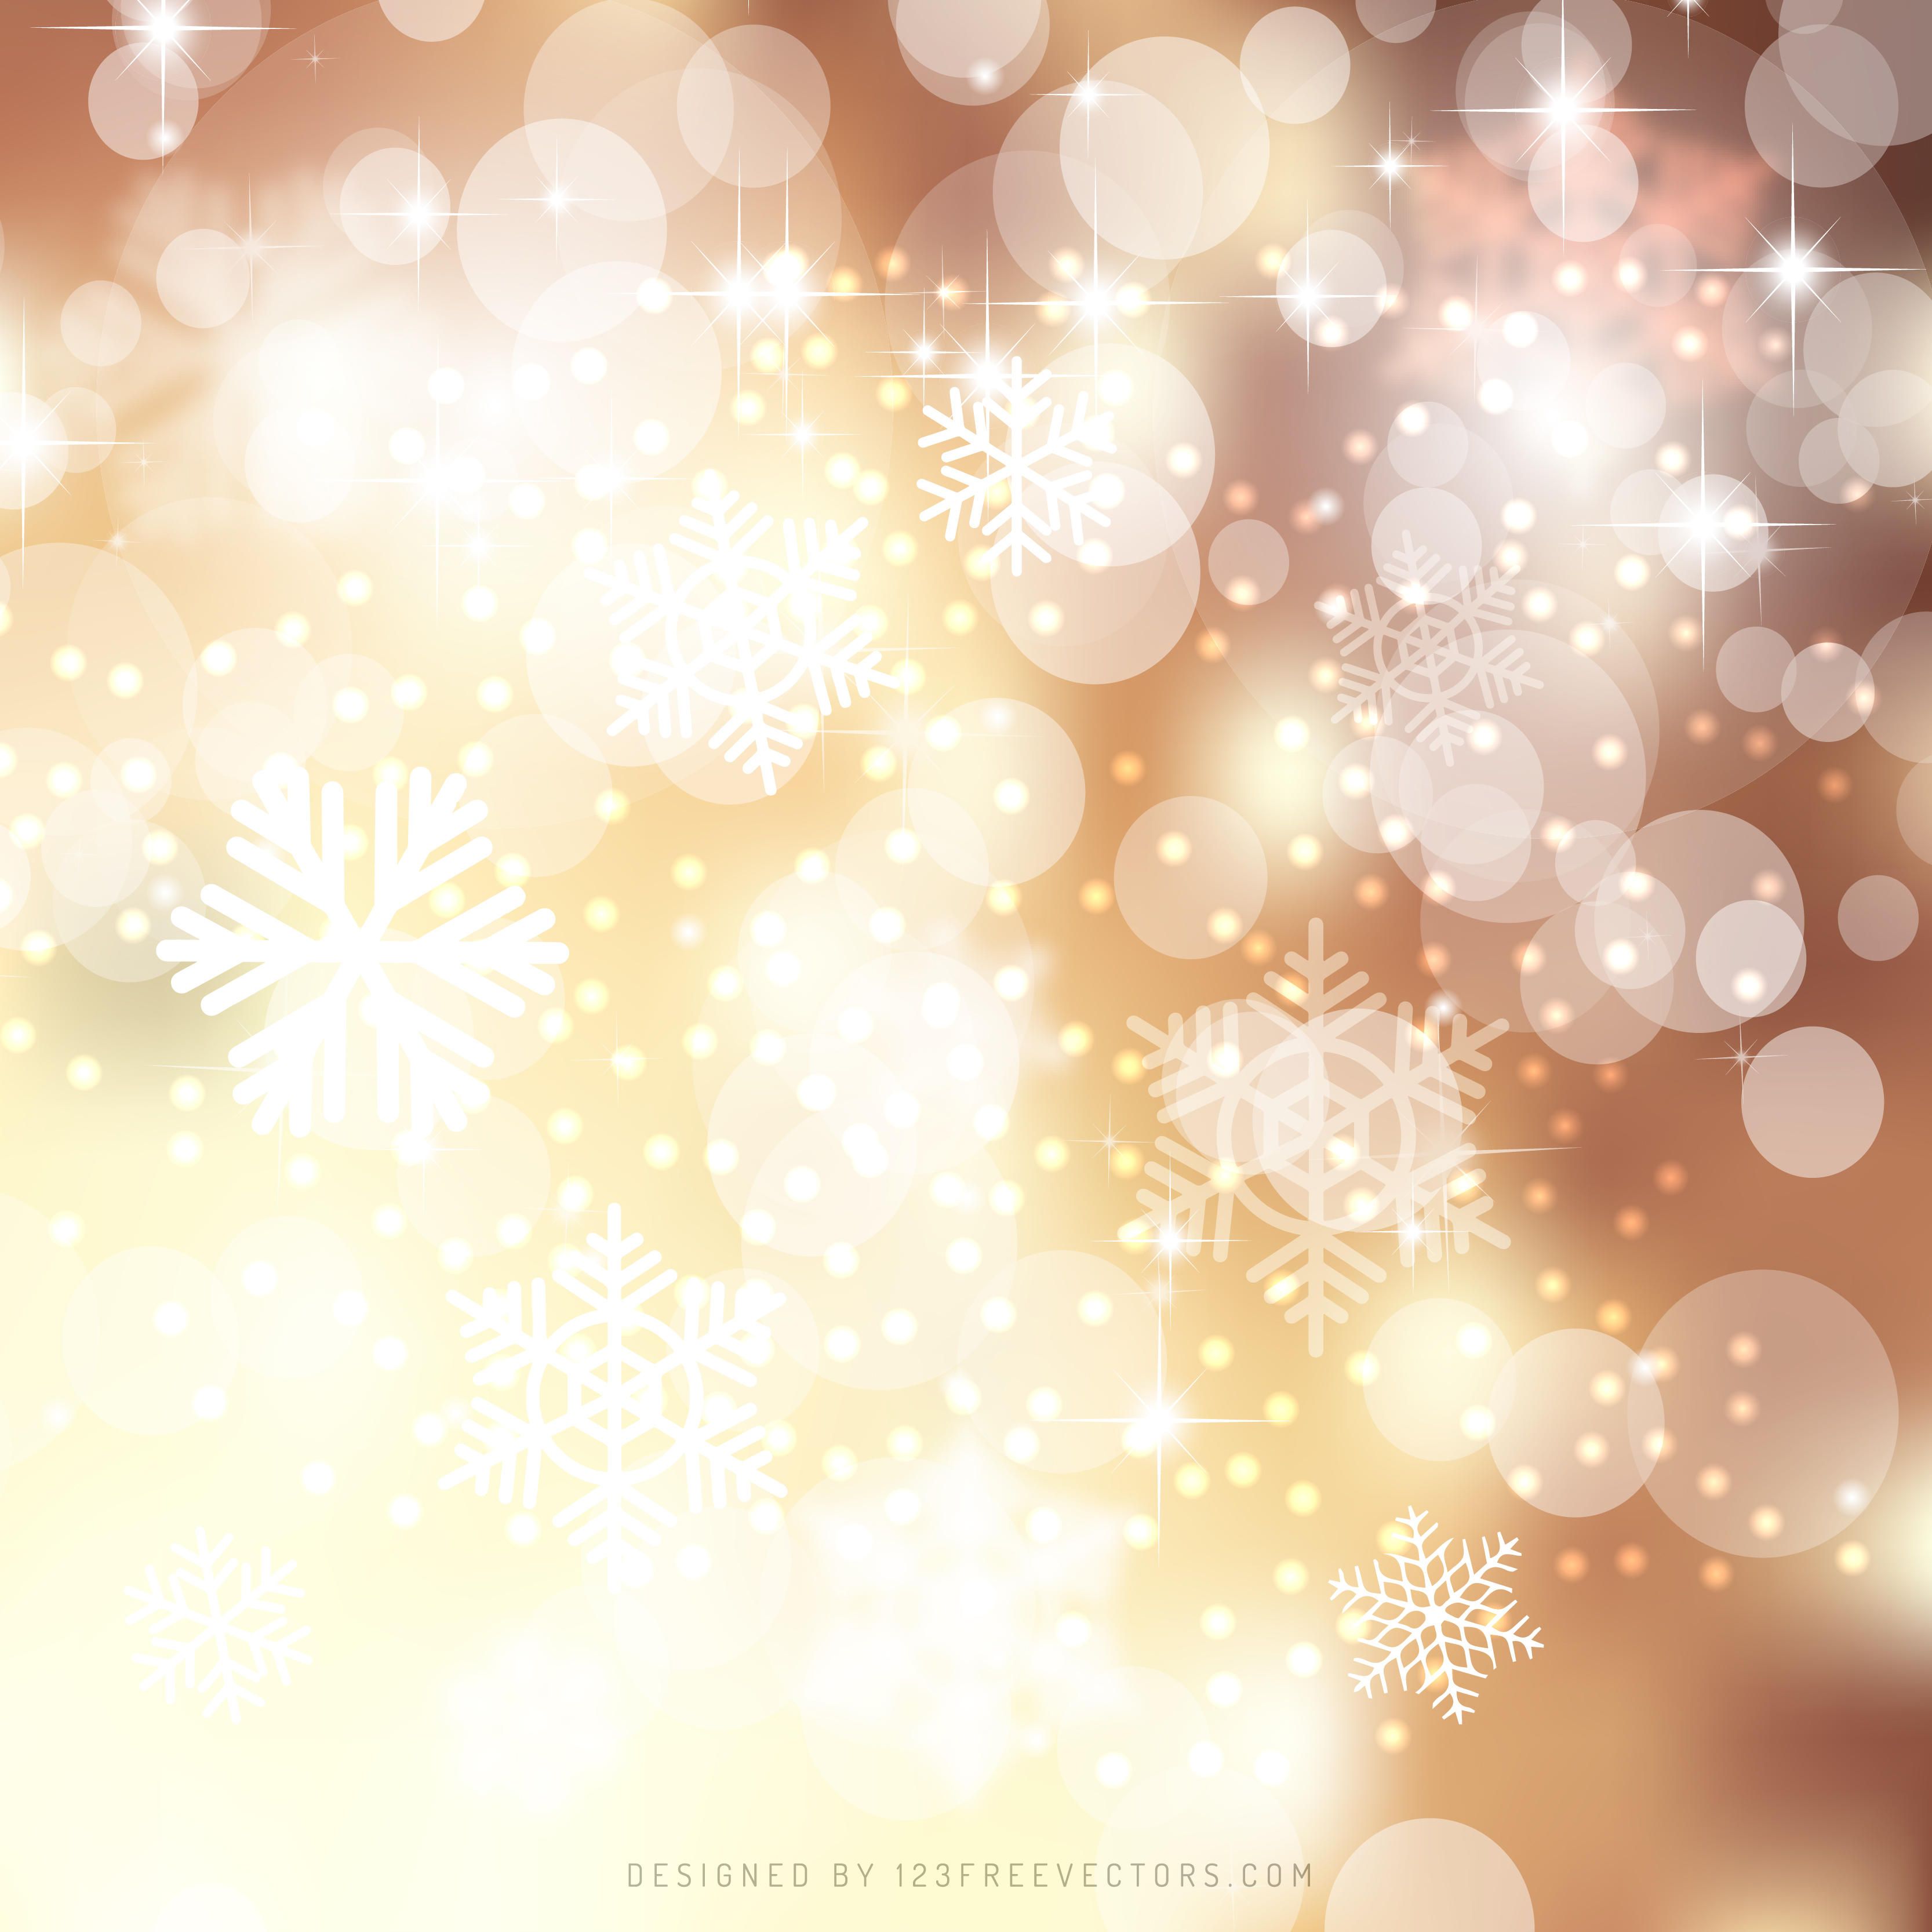 Light Brown Bokeh Christmas Lights Background Design